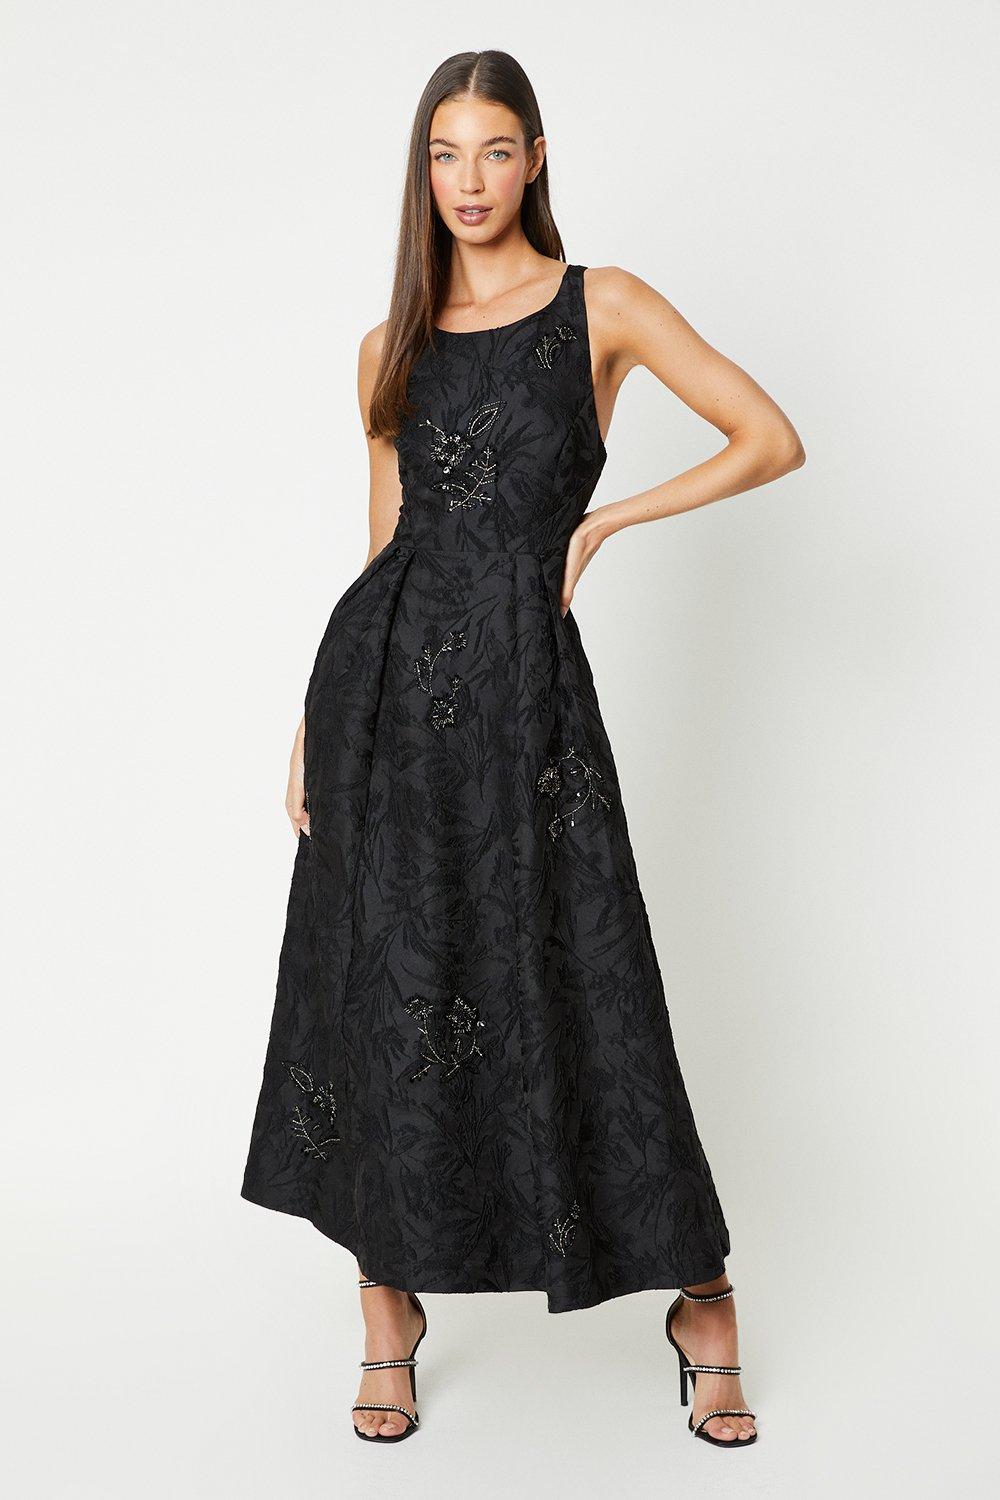 Premium Embellished Jacquard Cross Back Dress - Black